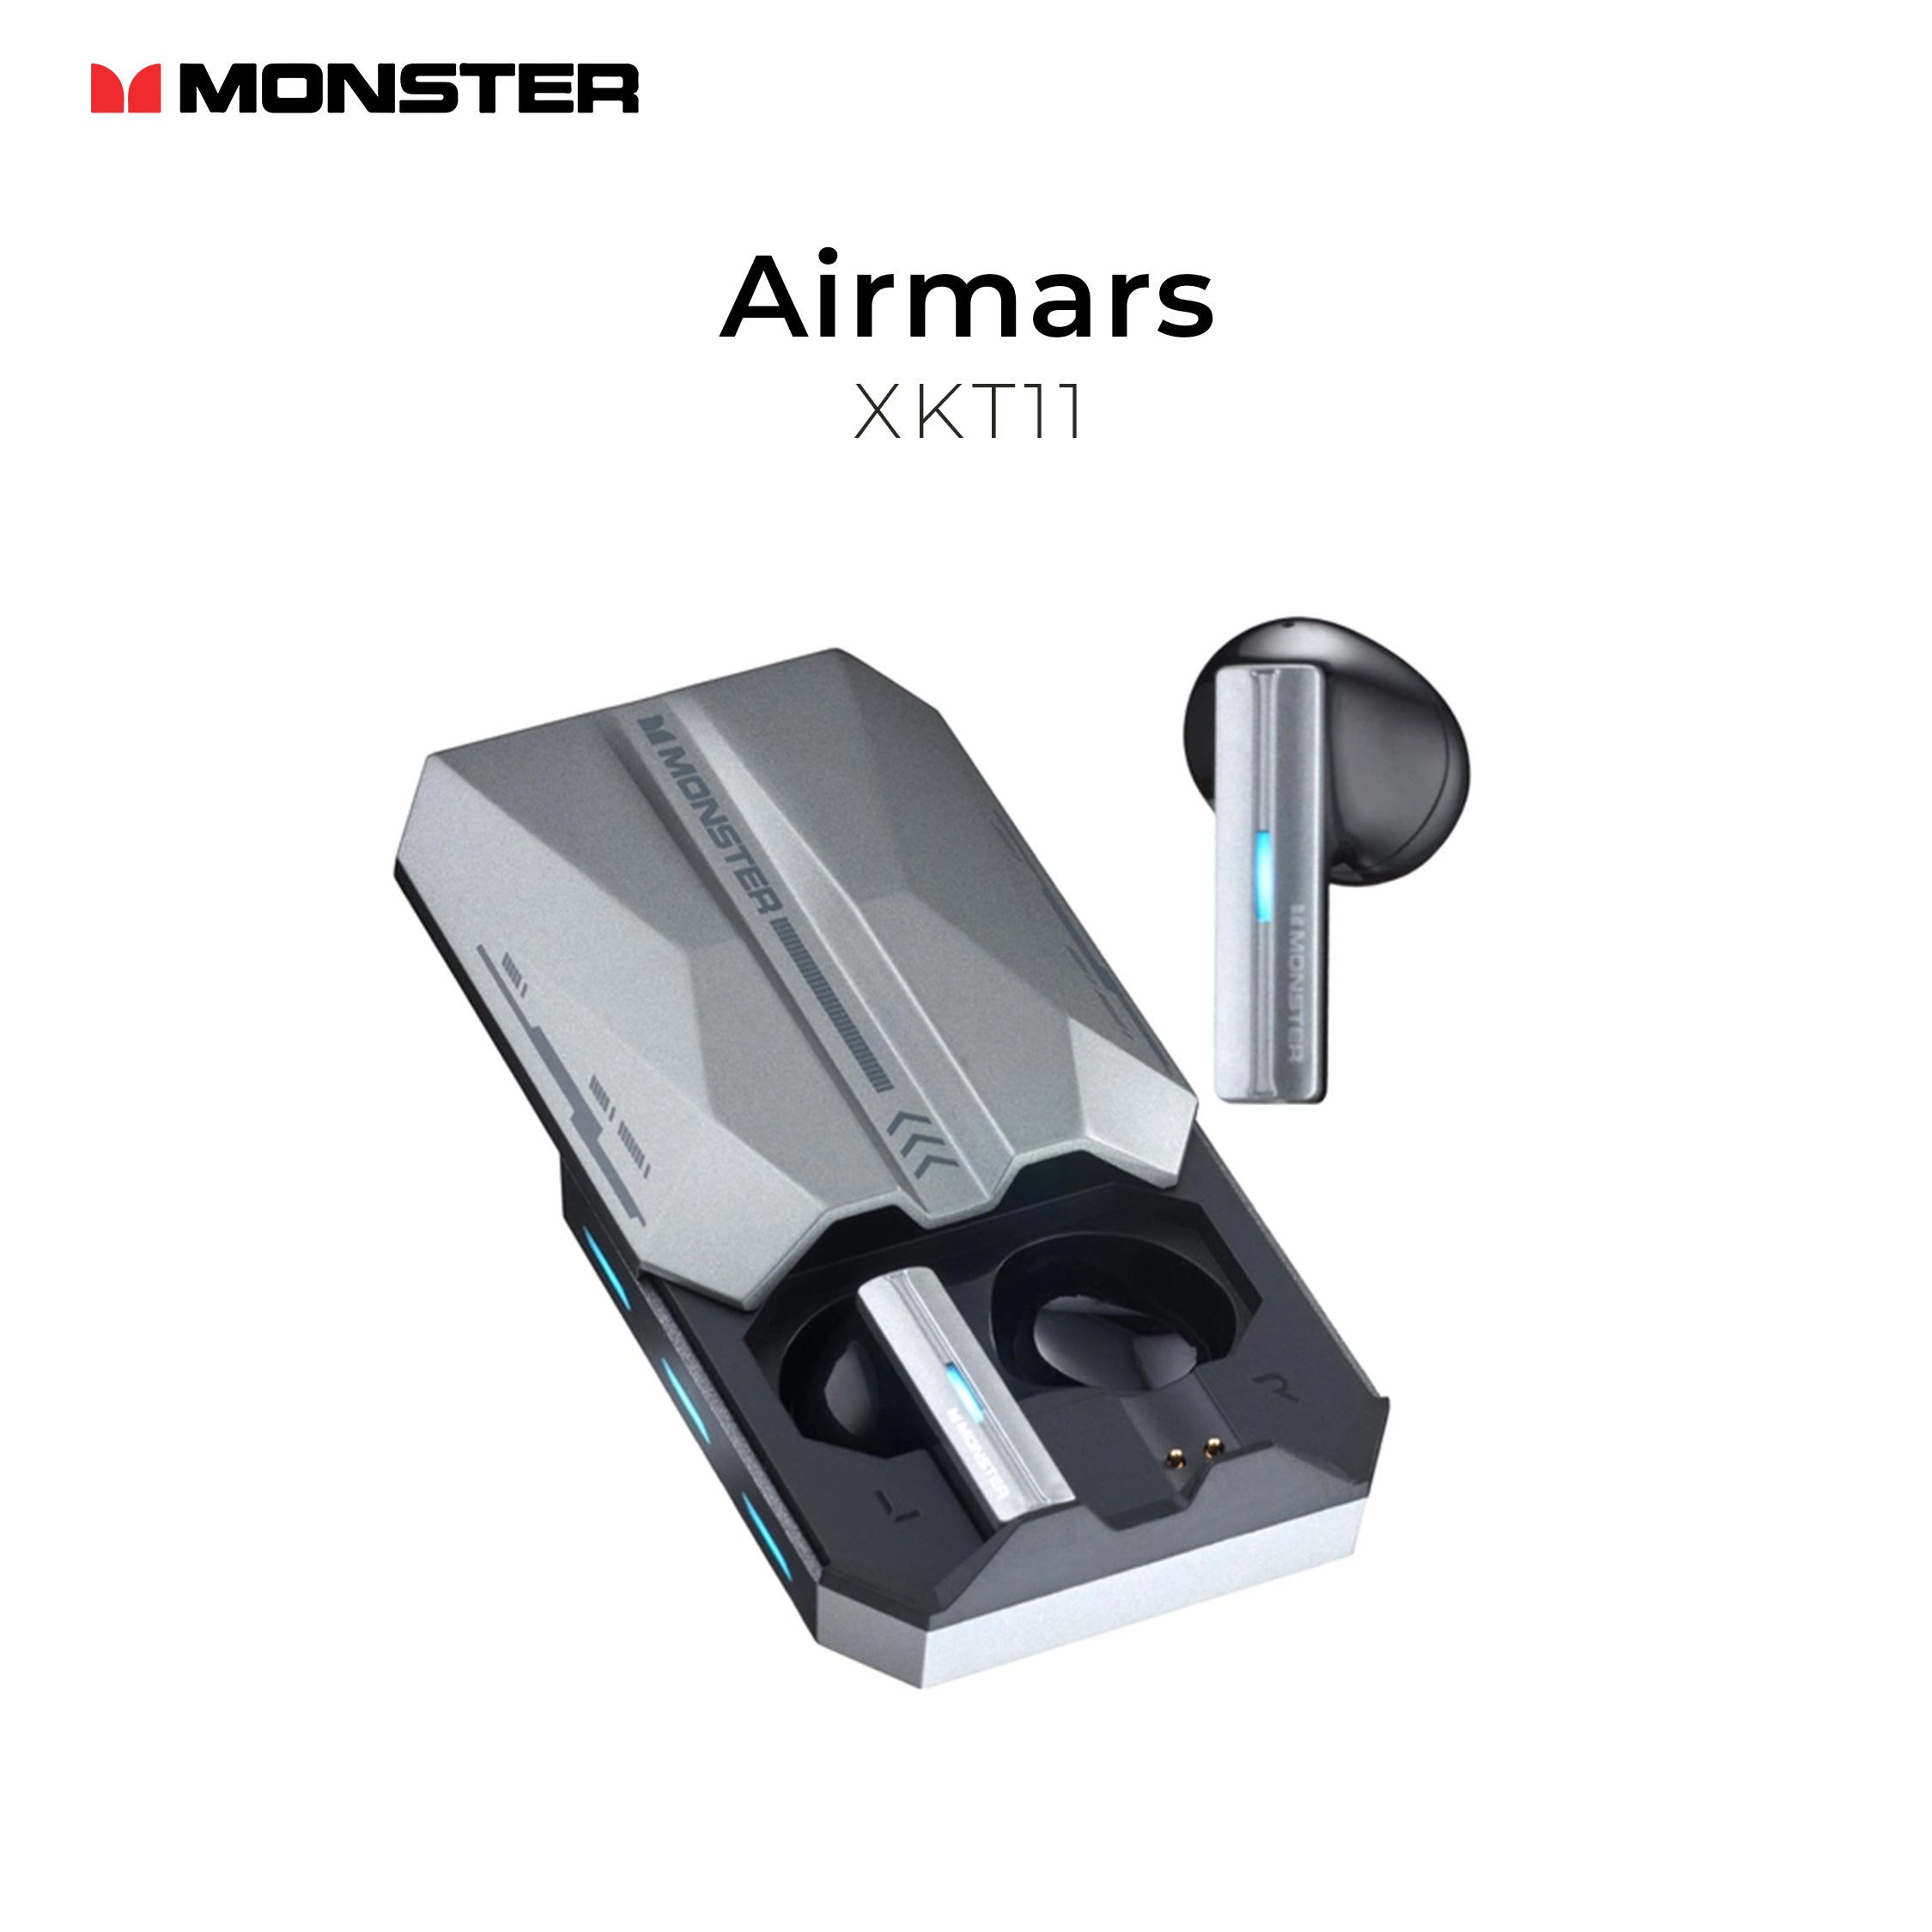 Monster Airmars Earbuds XKT11